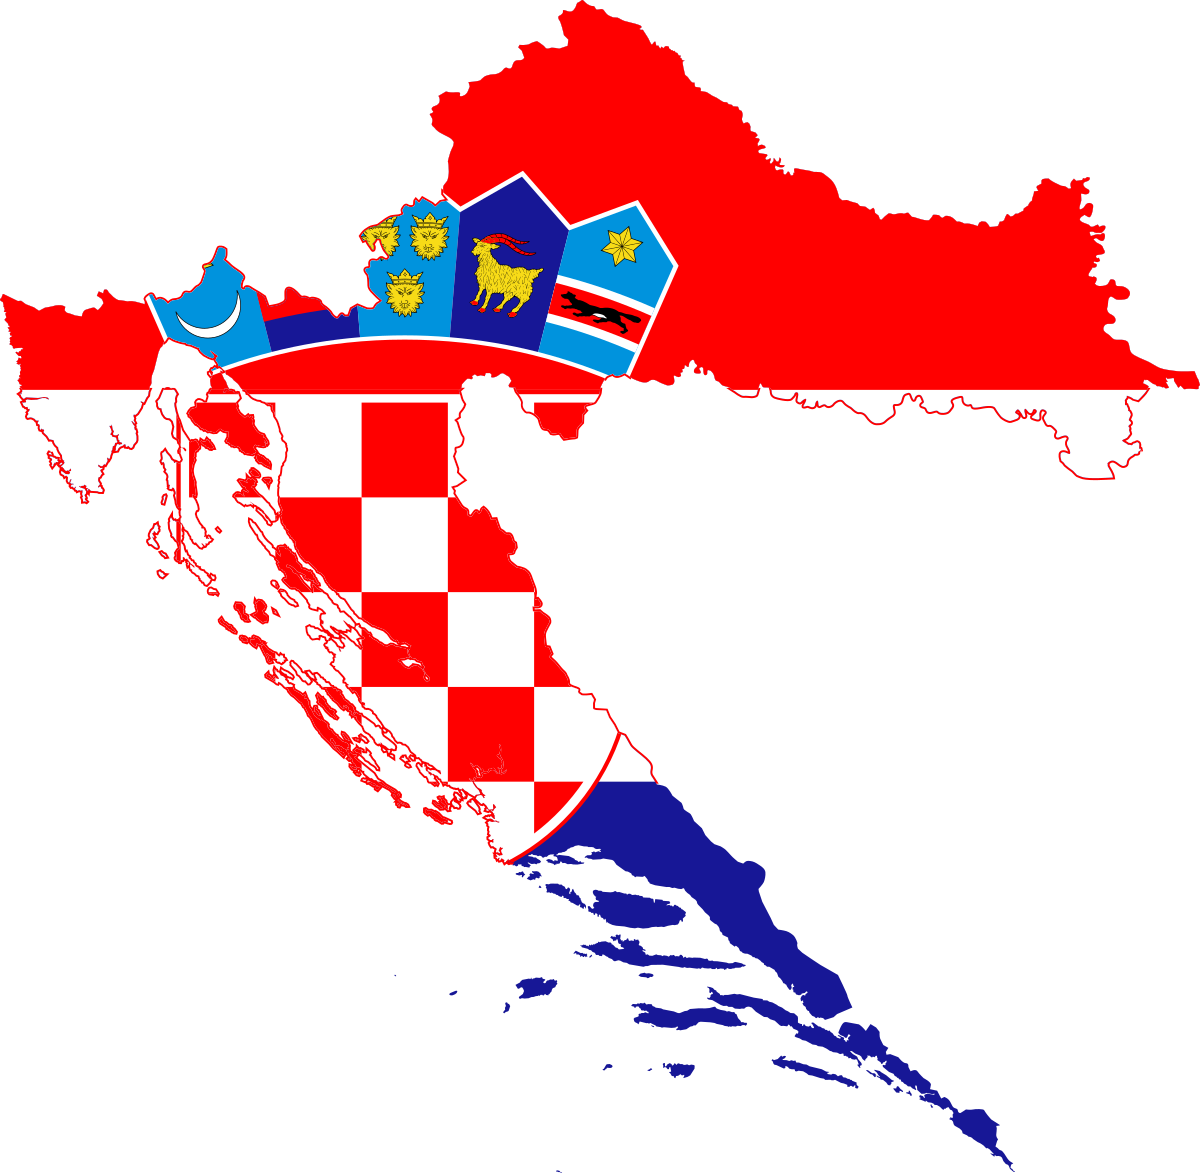 HNK Hajduk Split – Wikipédia, a enciclopédia livre